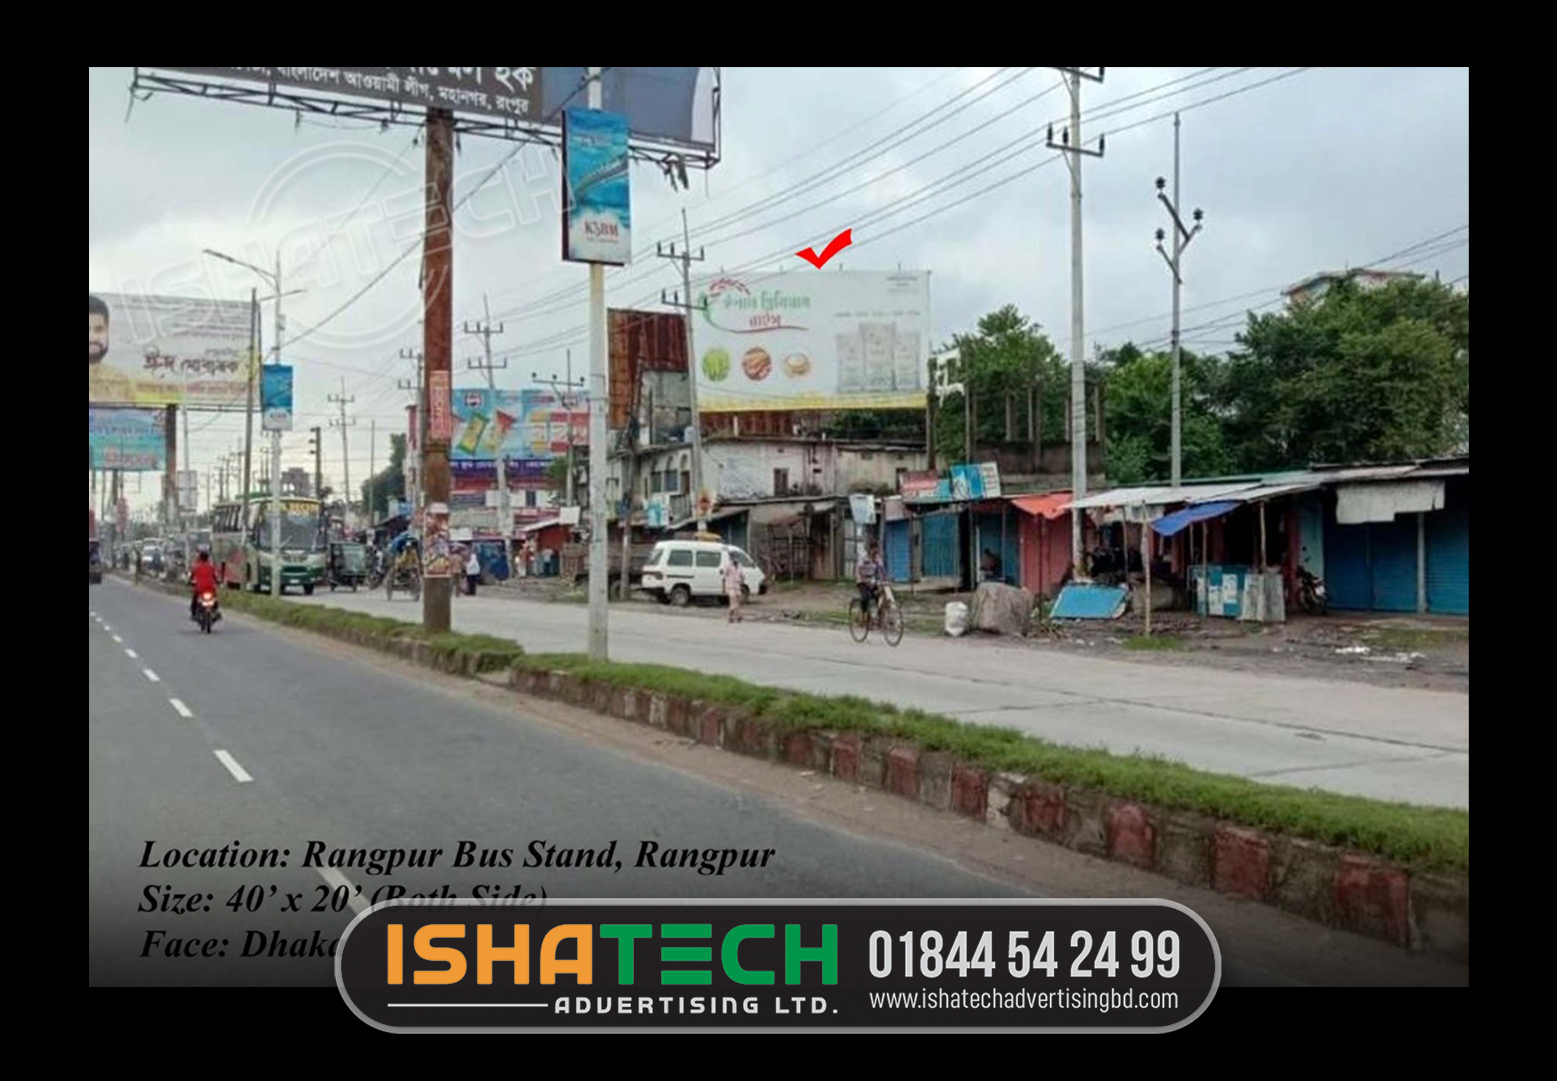 DIGITAL LED BILLBOARD IMPORTER AND SUPPLIER COMPANY IN DHAKA, BANGLADESH